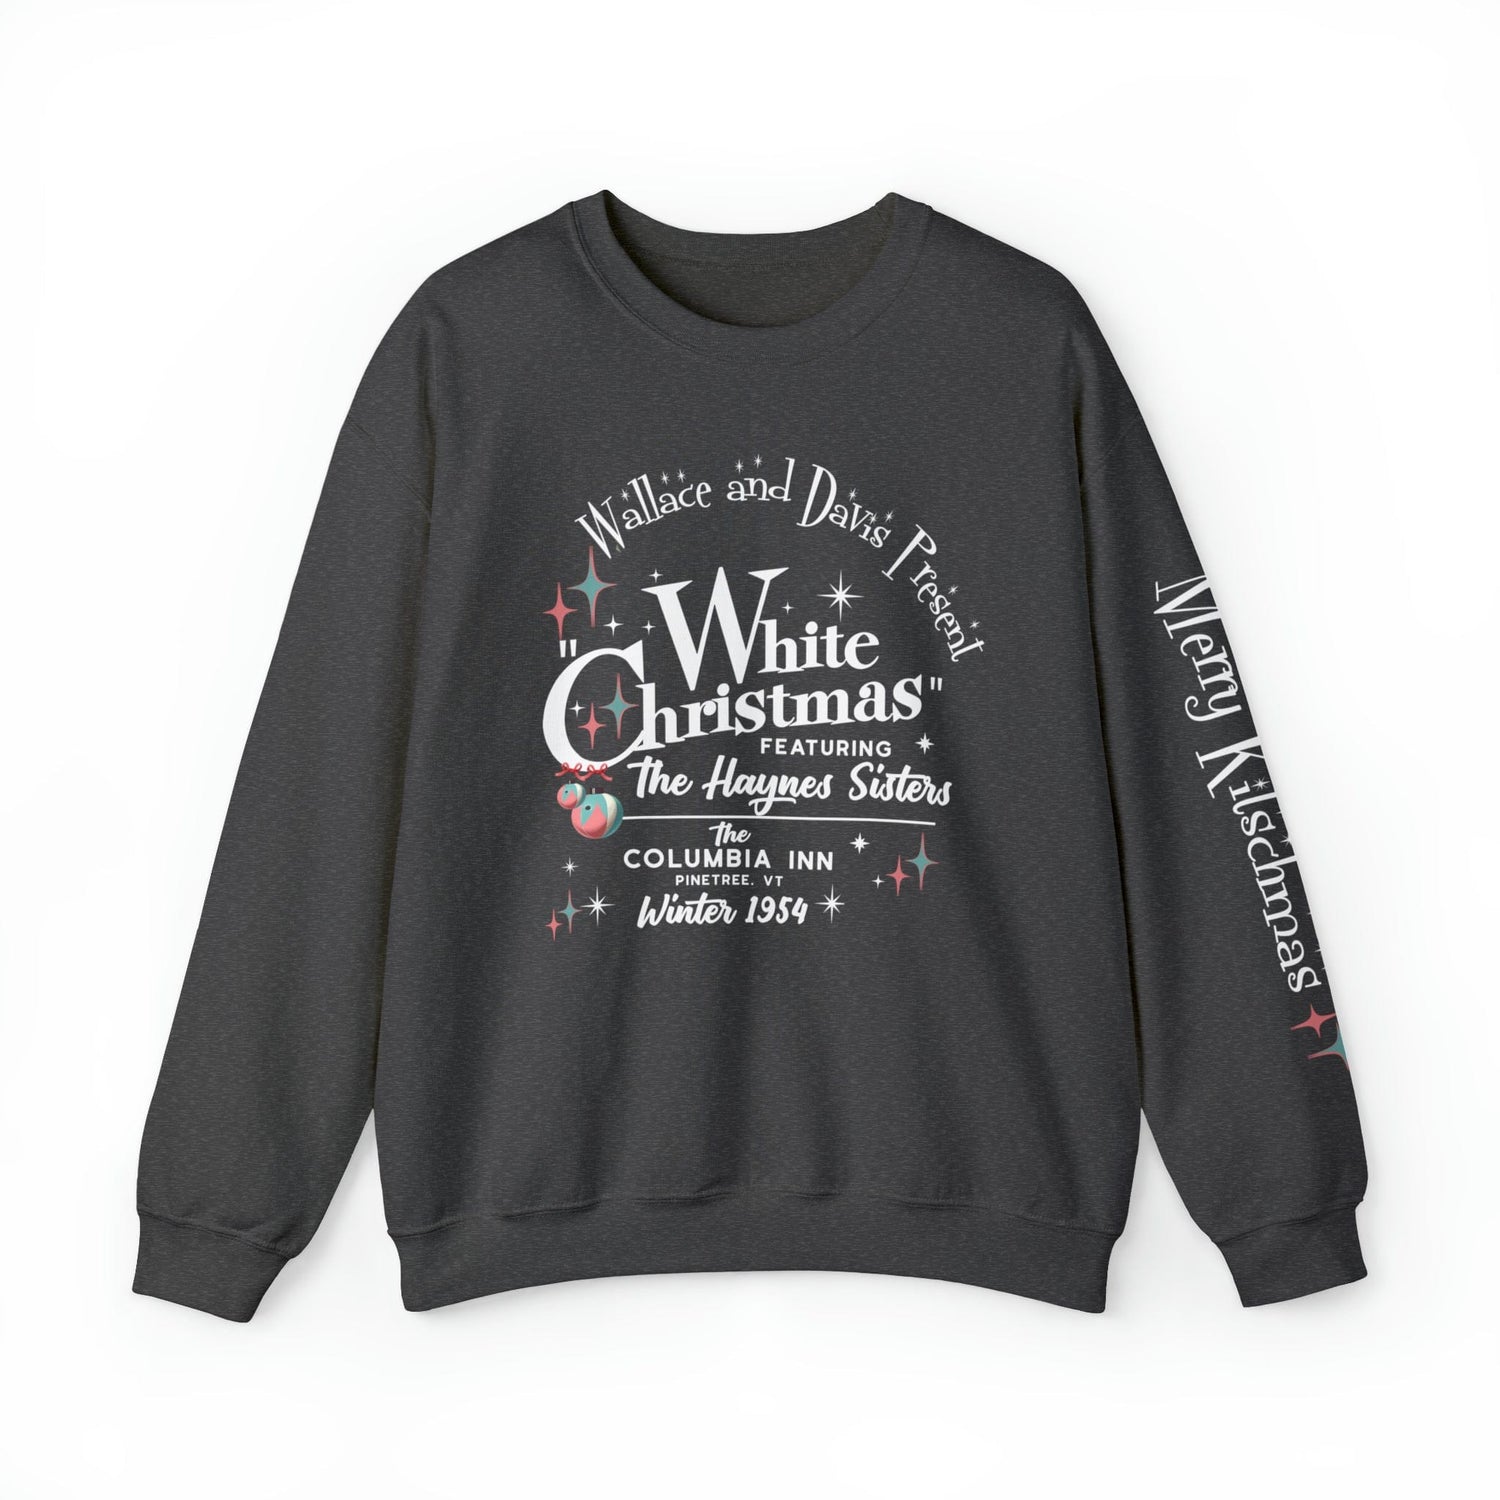 Mid Century Modern Christmas Sweatshirt, Wallace And Davis Present A White Christmas 1954 Movie Kitschy Christmas Sweatshirt